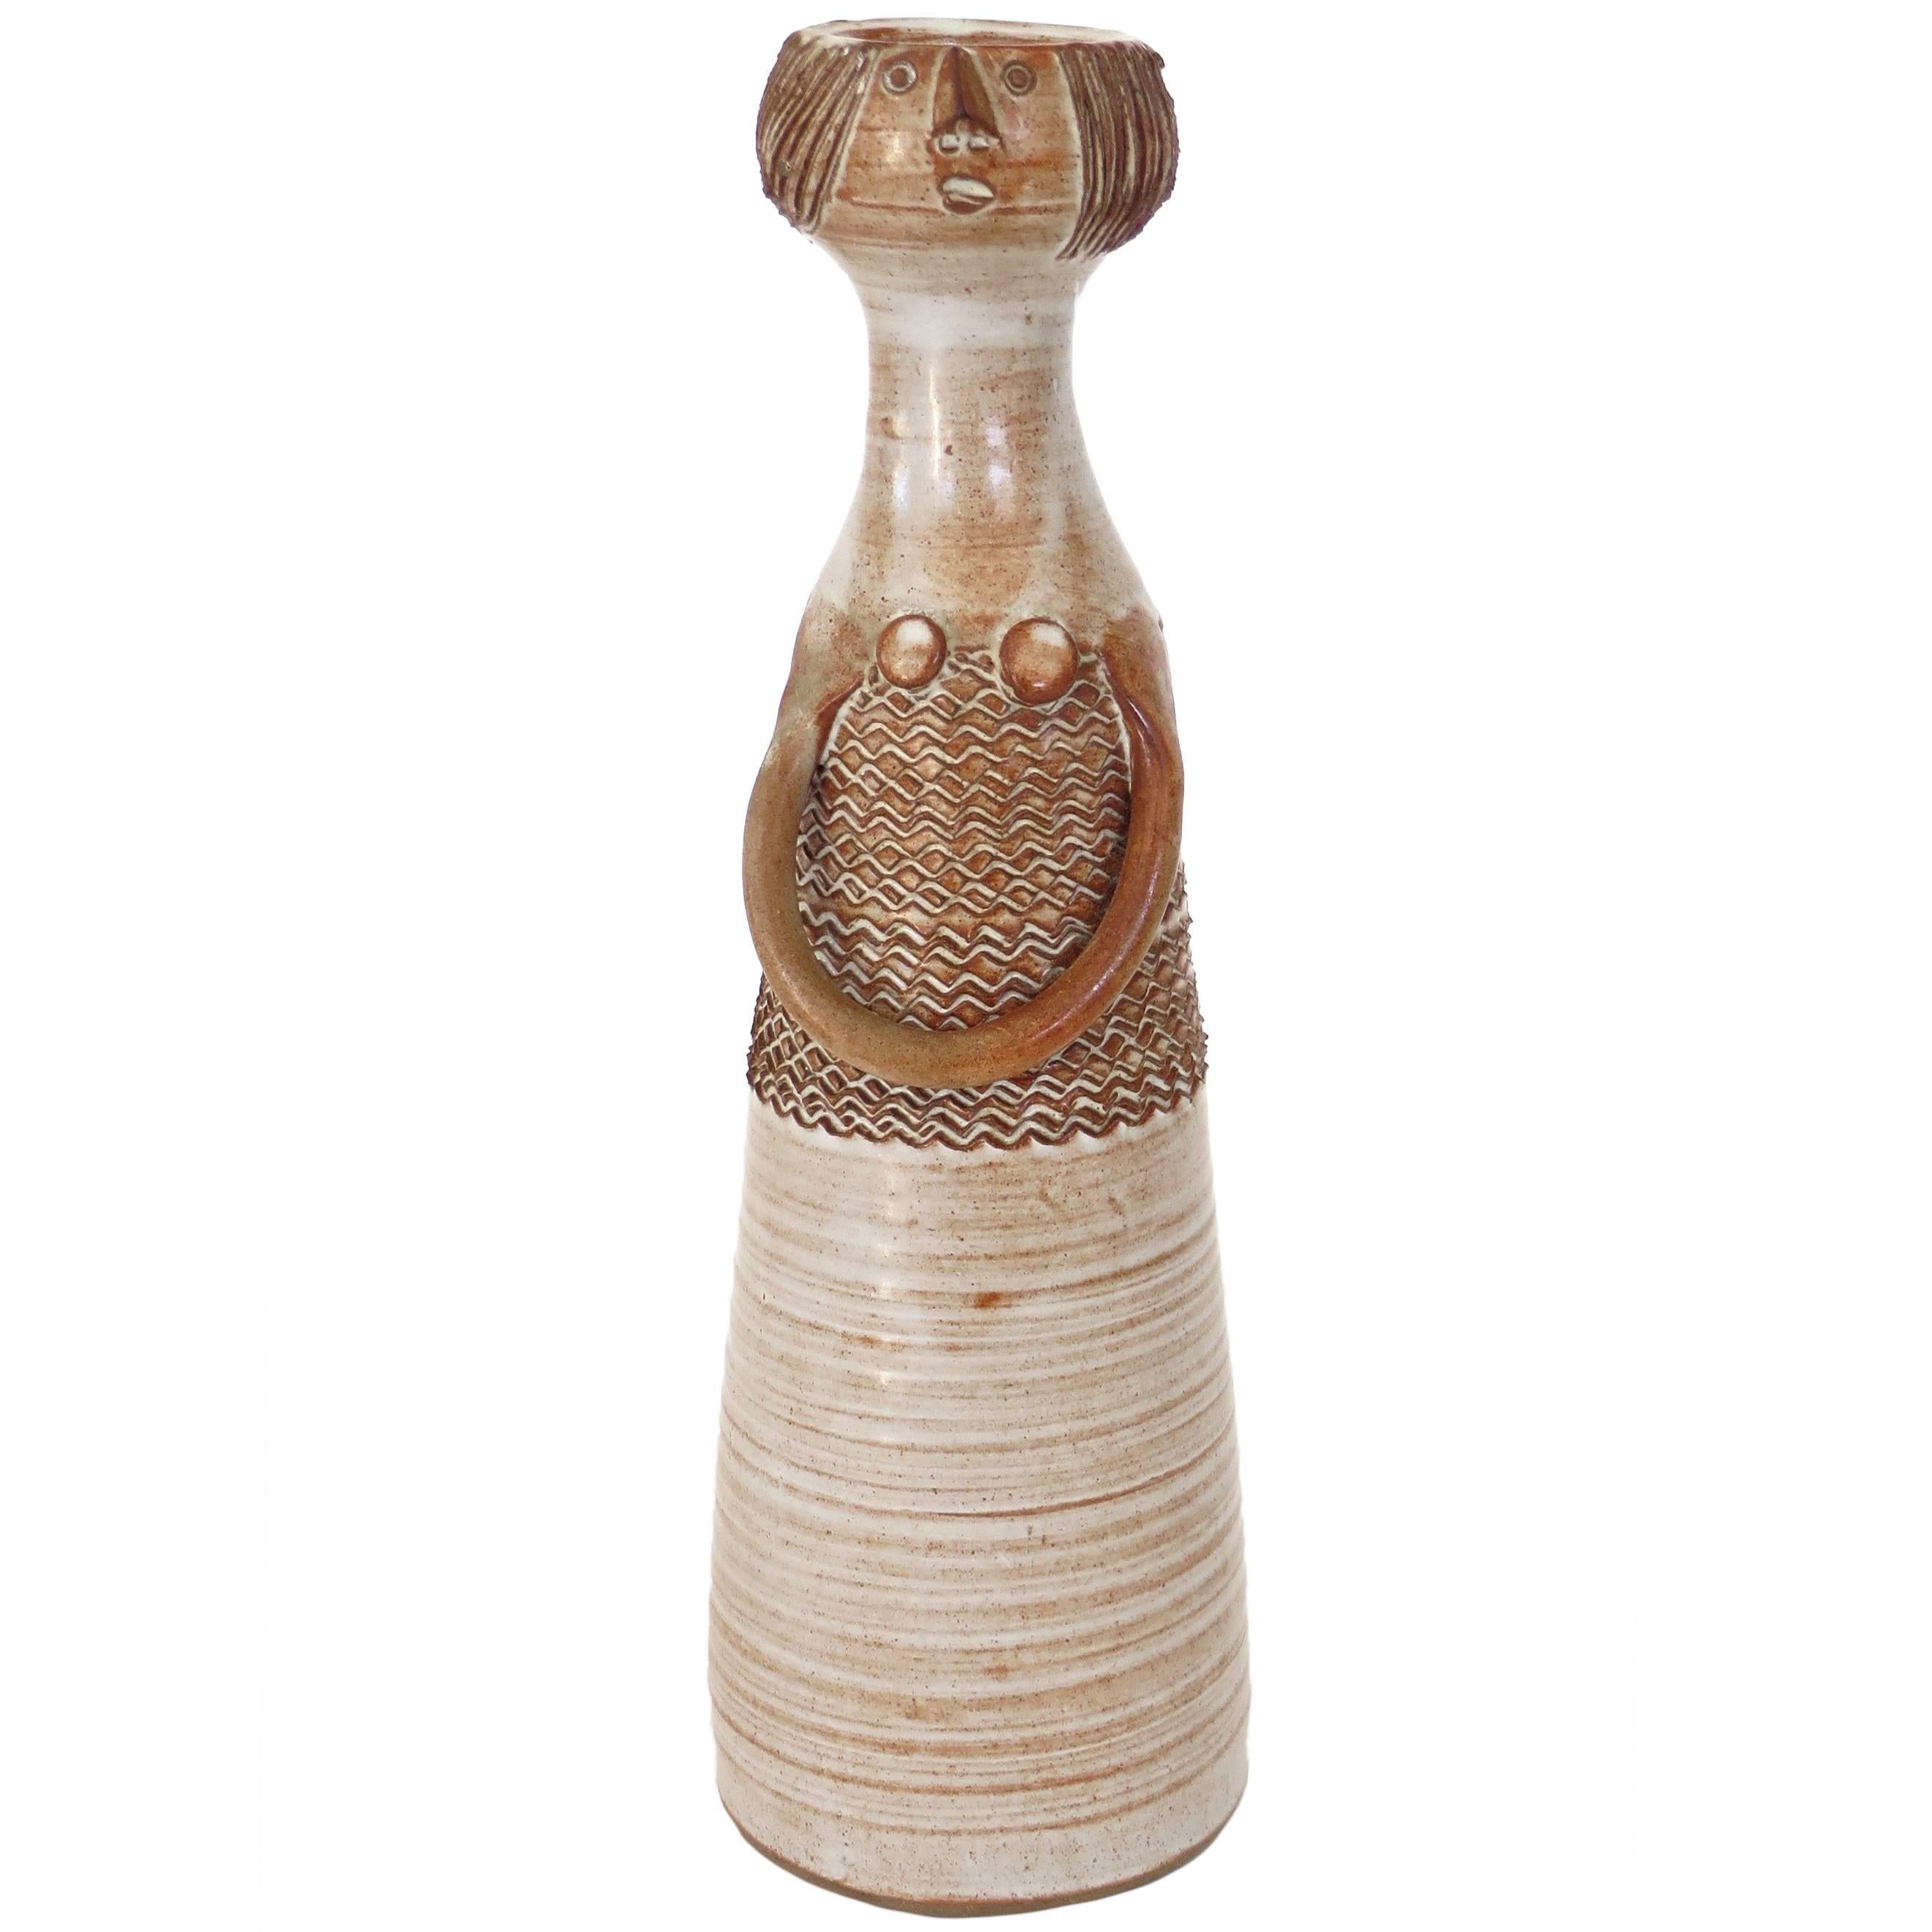 Ceramic Vase by French Ceramicist Jacques Pouchain Signed JP, Atelier Dieulefit